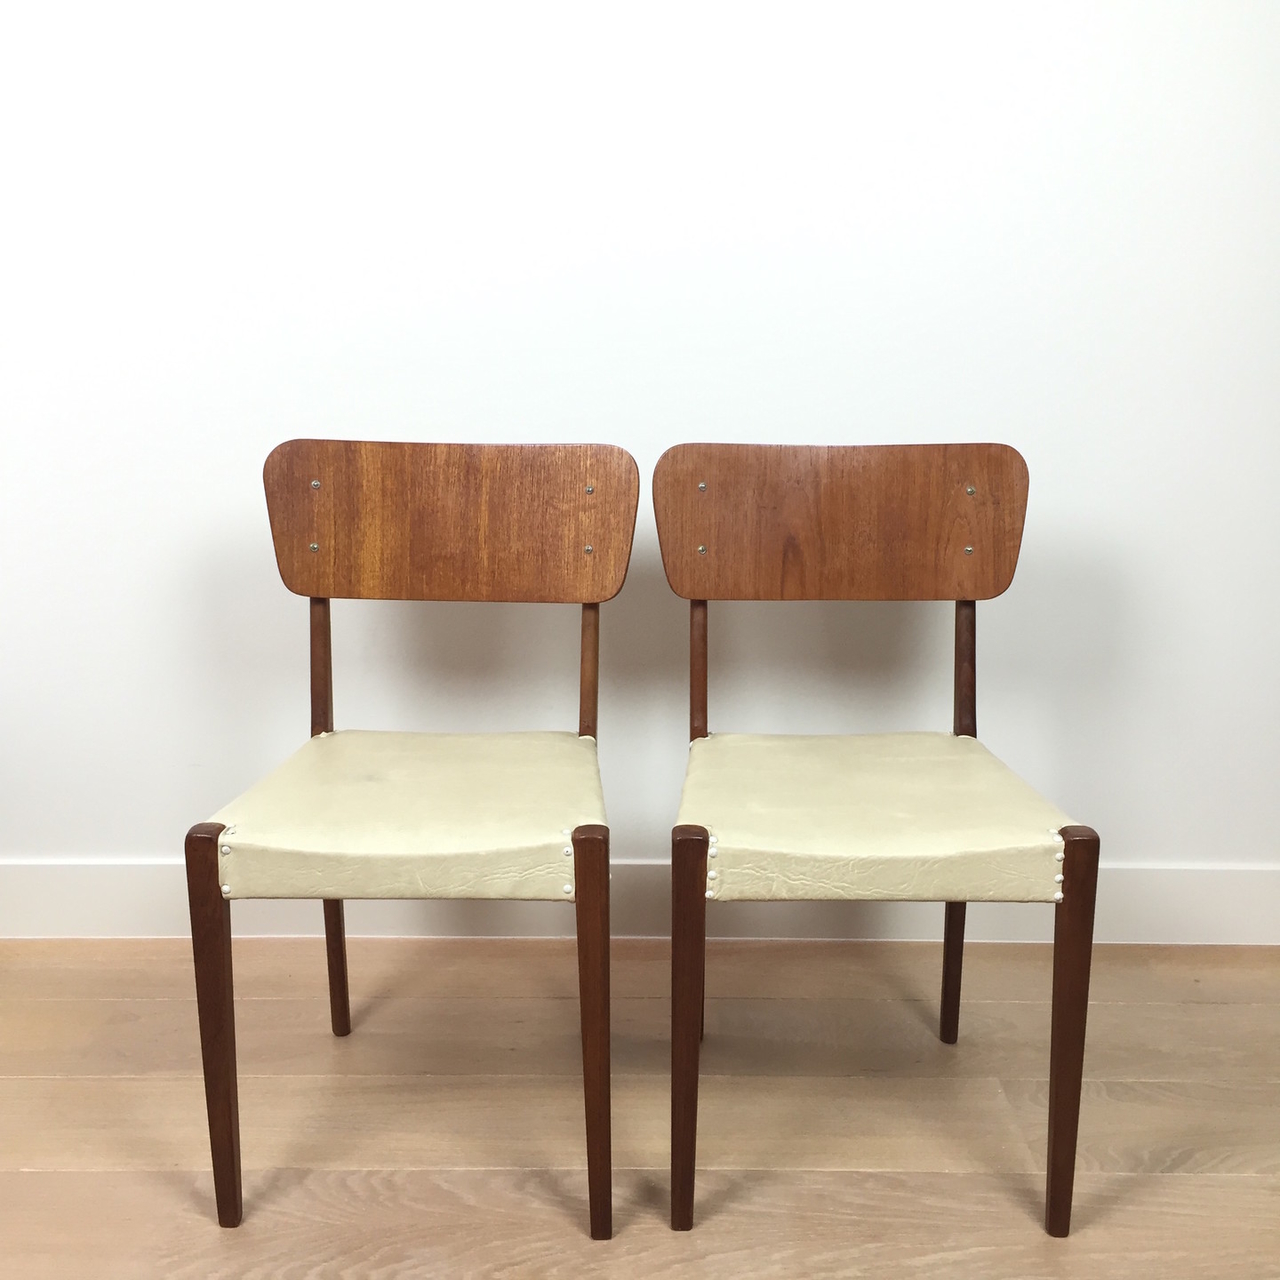 Punt Sterkte Dynamiek Vintage teak houten stoelen wit skai